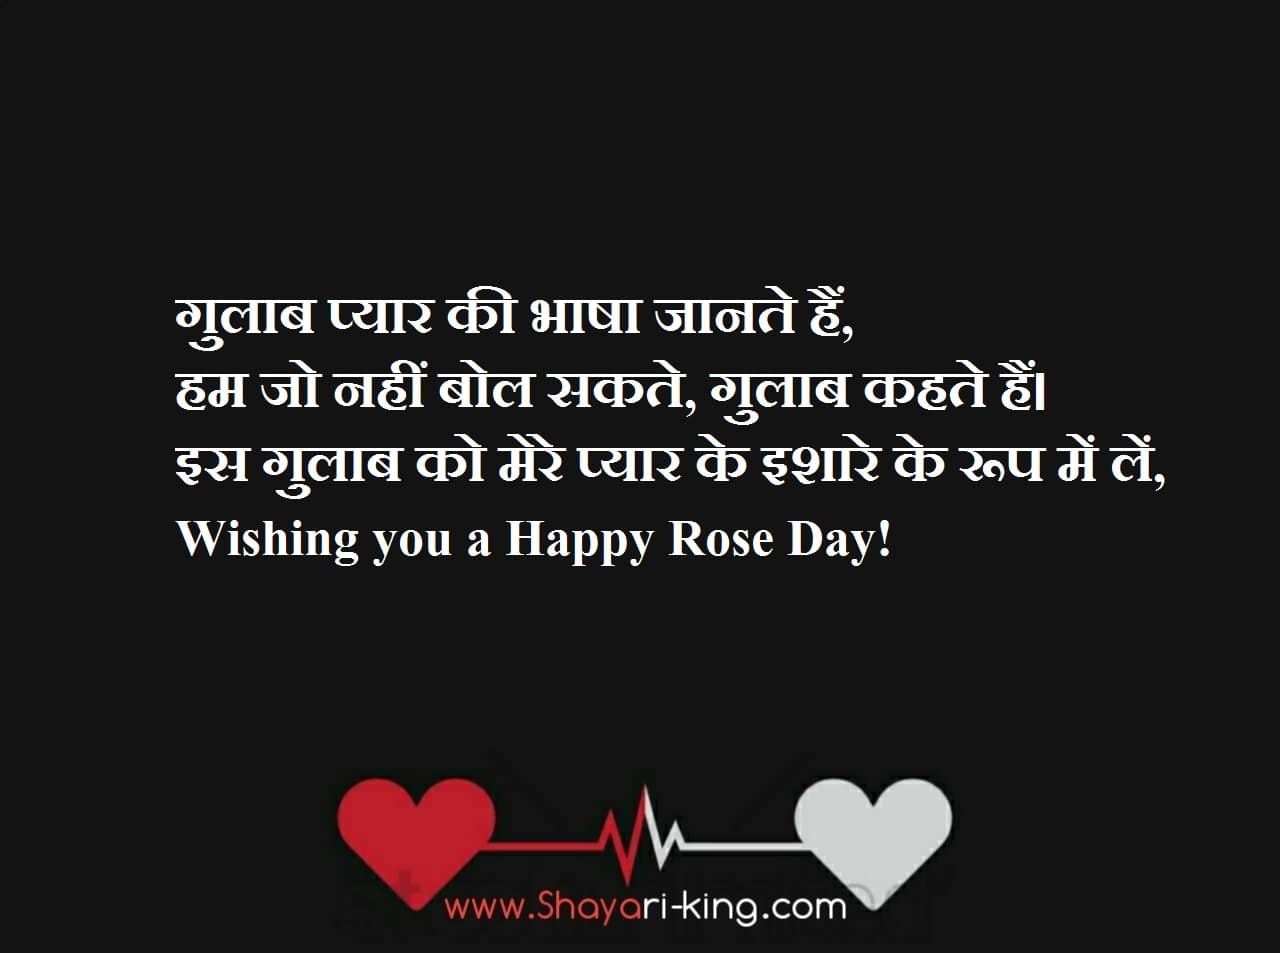 Rose day quotes shayari in hindi